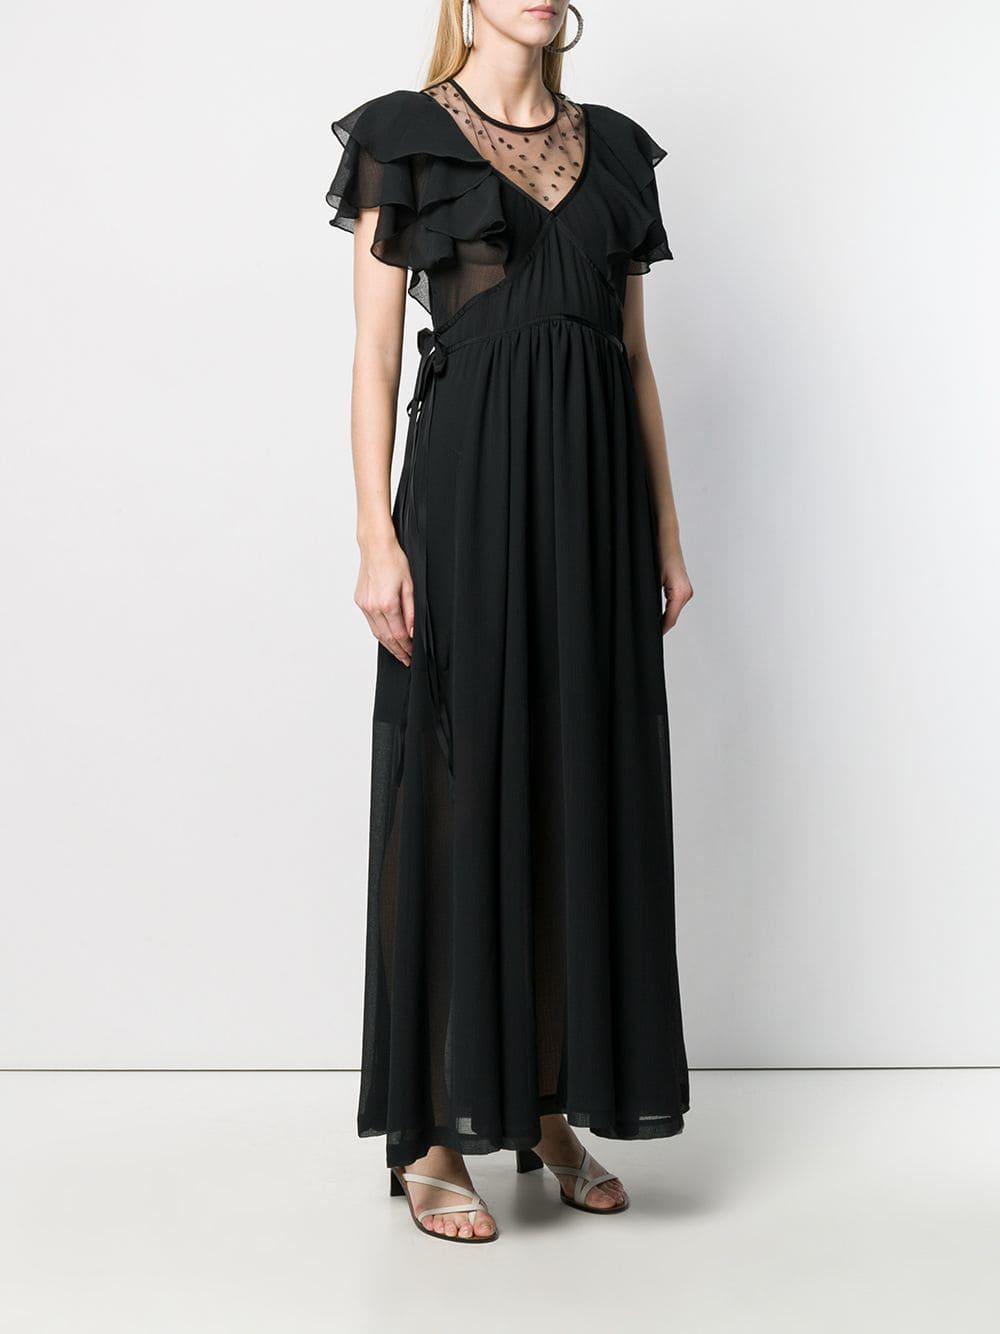 Philosophy Di Lorenzo Serafini Cotton Ruffle Maxi Dress in Black - Lyst